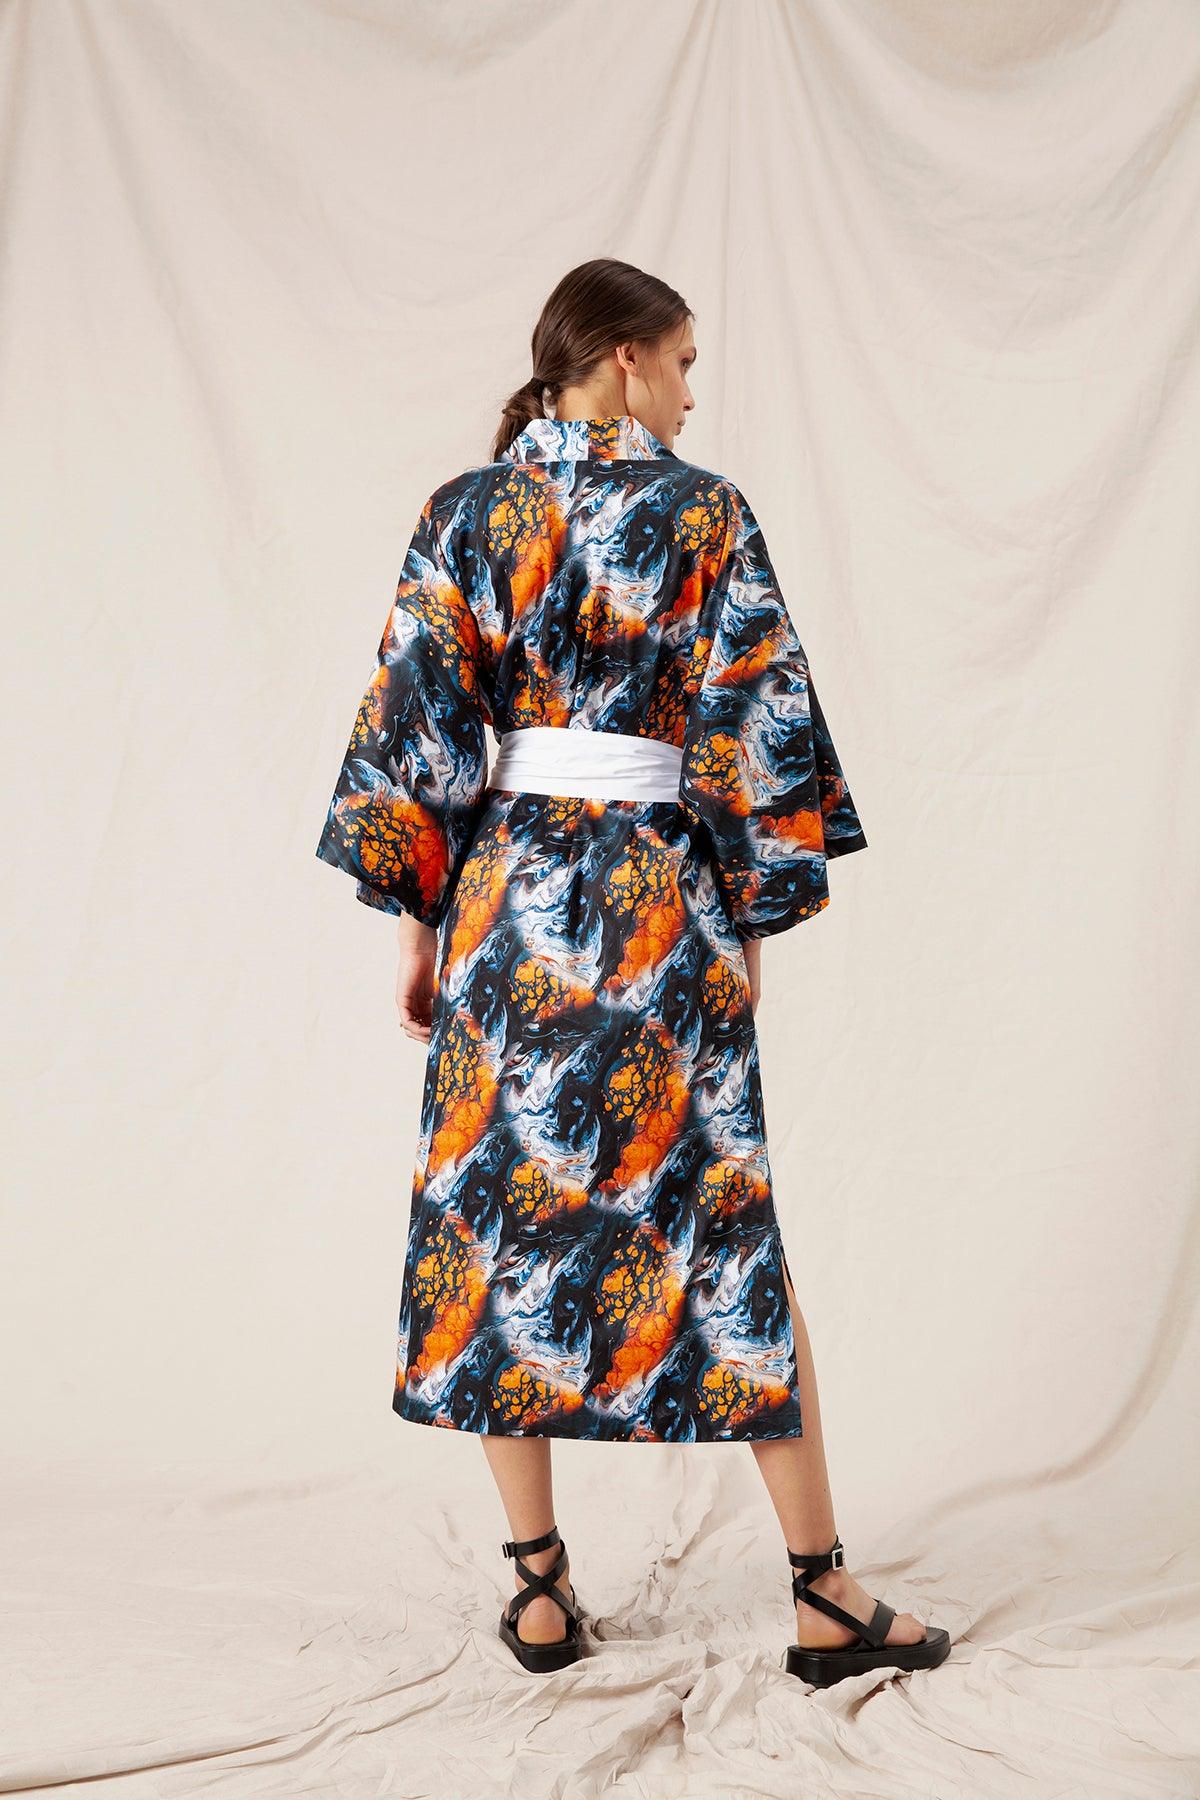 Hermonie's Kimono by Ladiesse